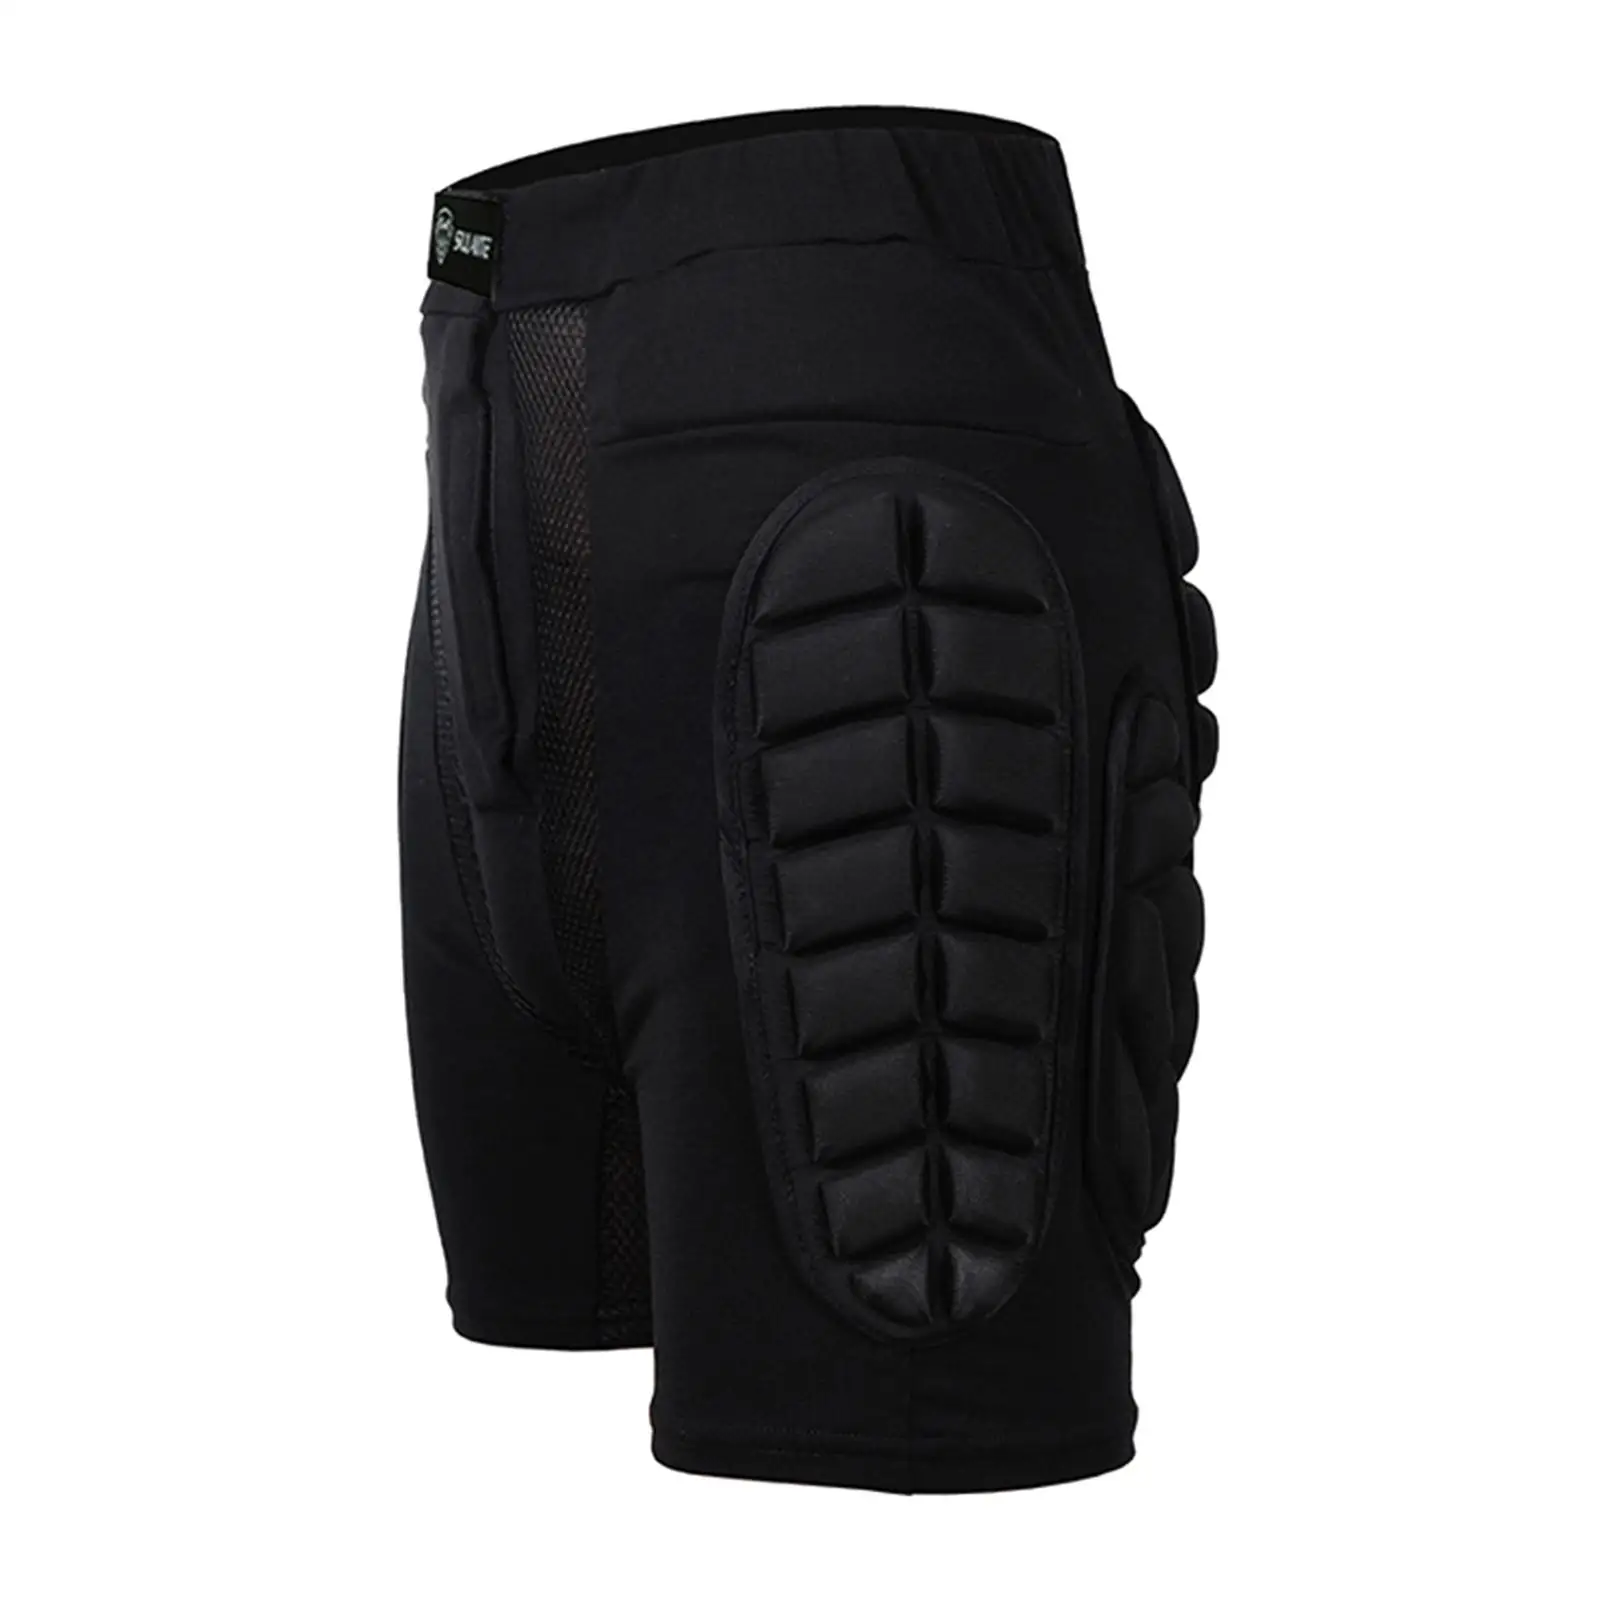 Padded Shorts Protection Hip Pants Body Protection Sliders for Ski Skate